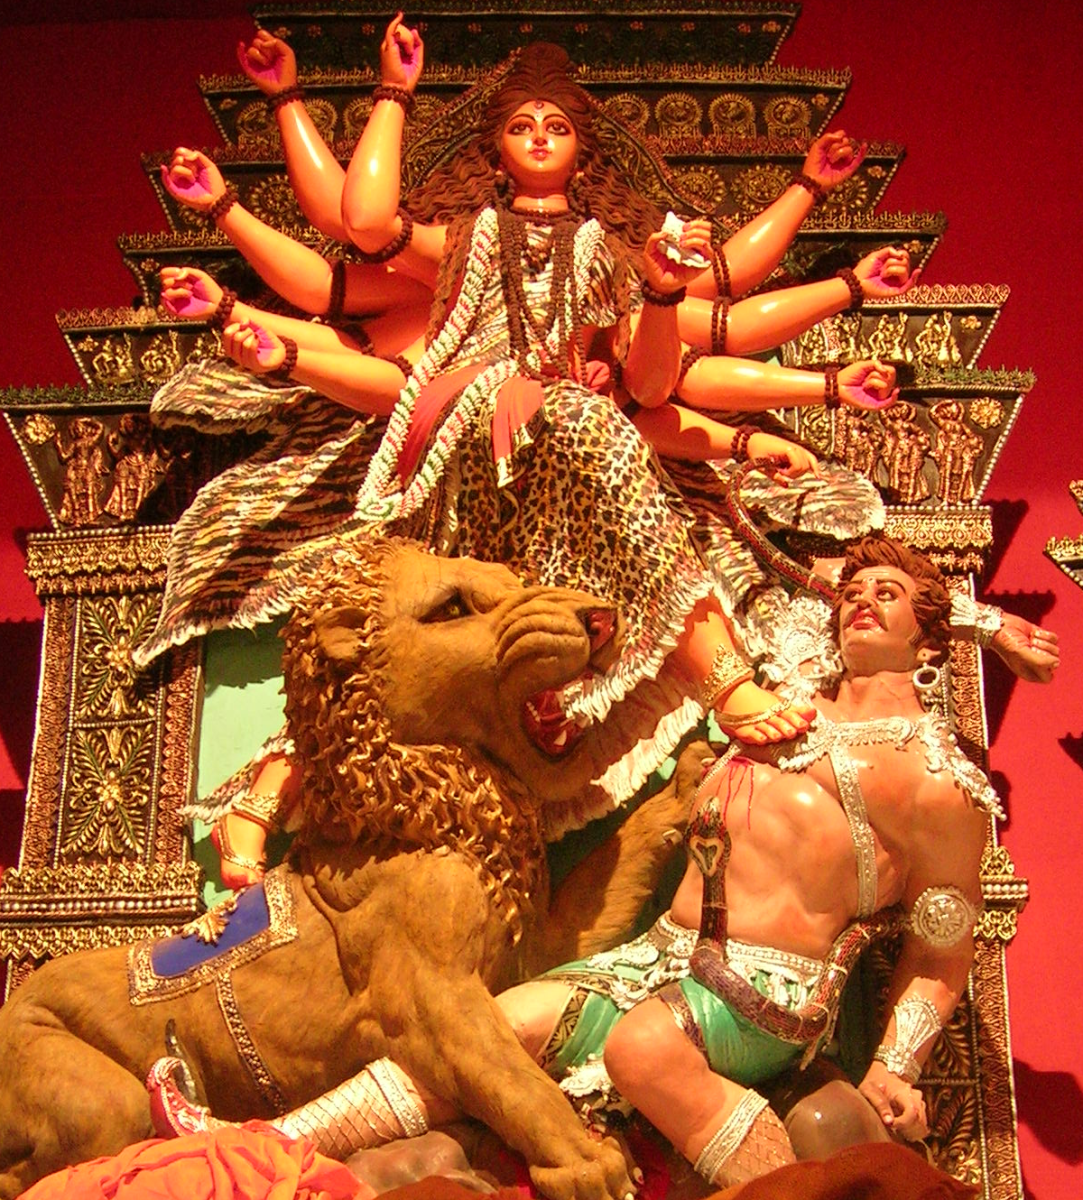 Goddess Durga riding on her lion and attacking demon Mahisasur.